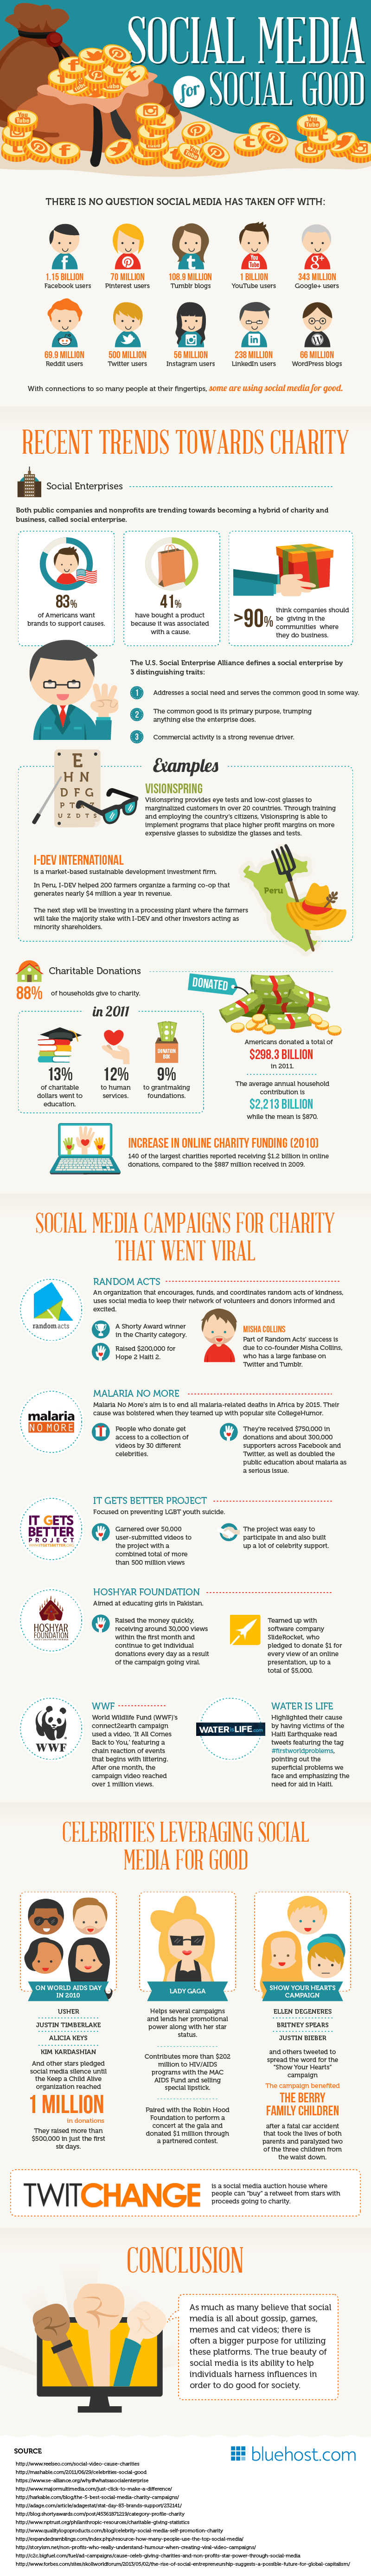 Brands embrace social media for social good [INFOGRAPHIC]